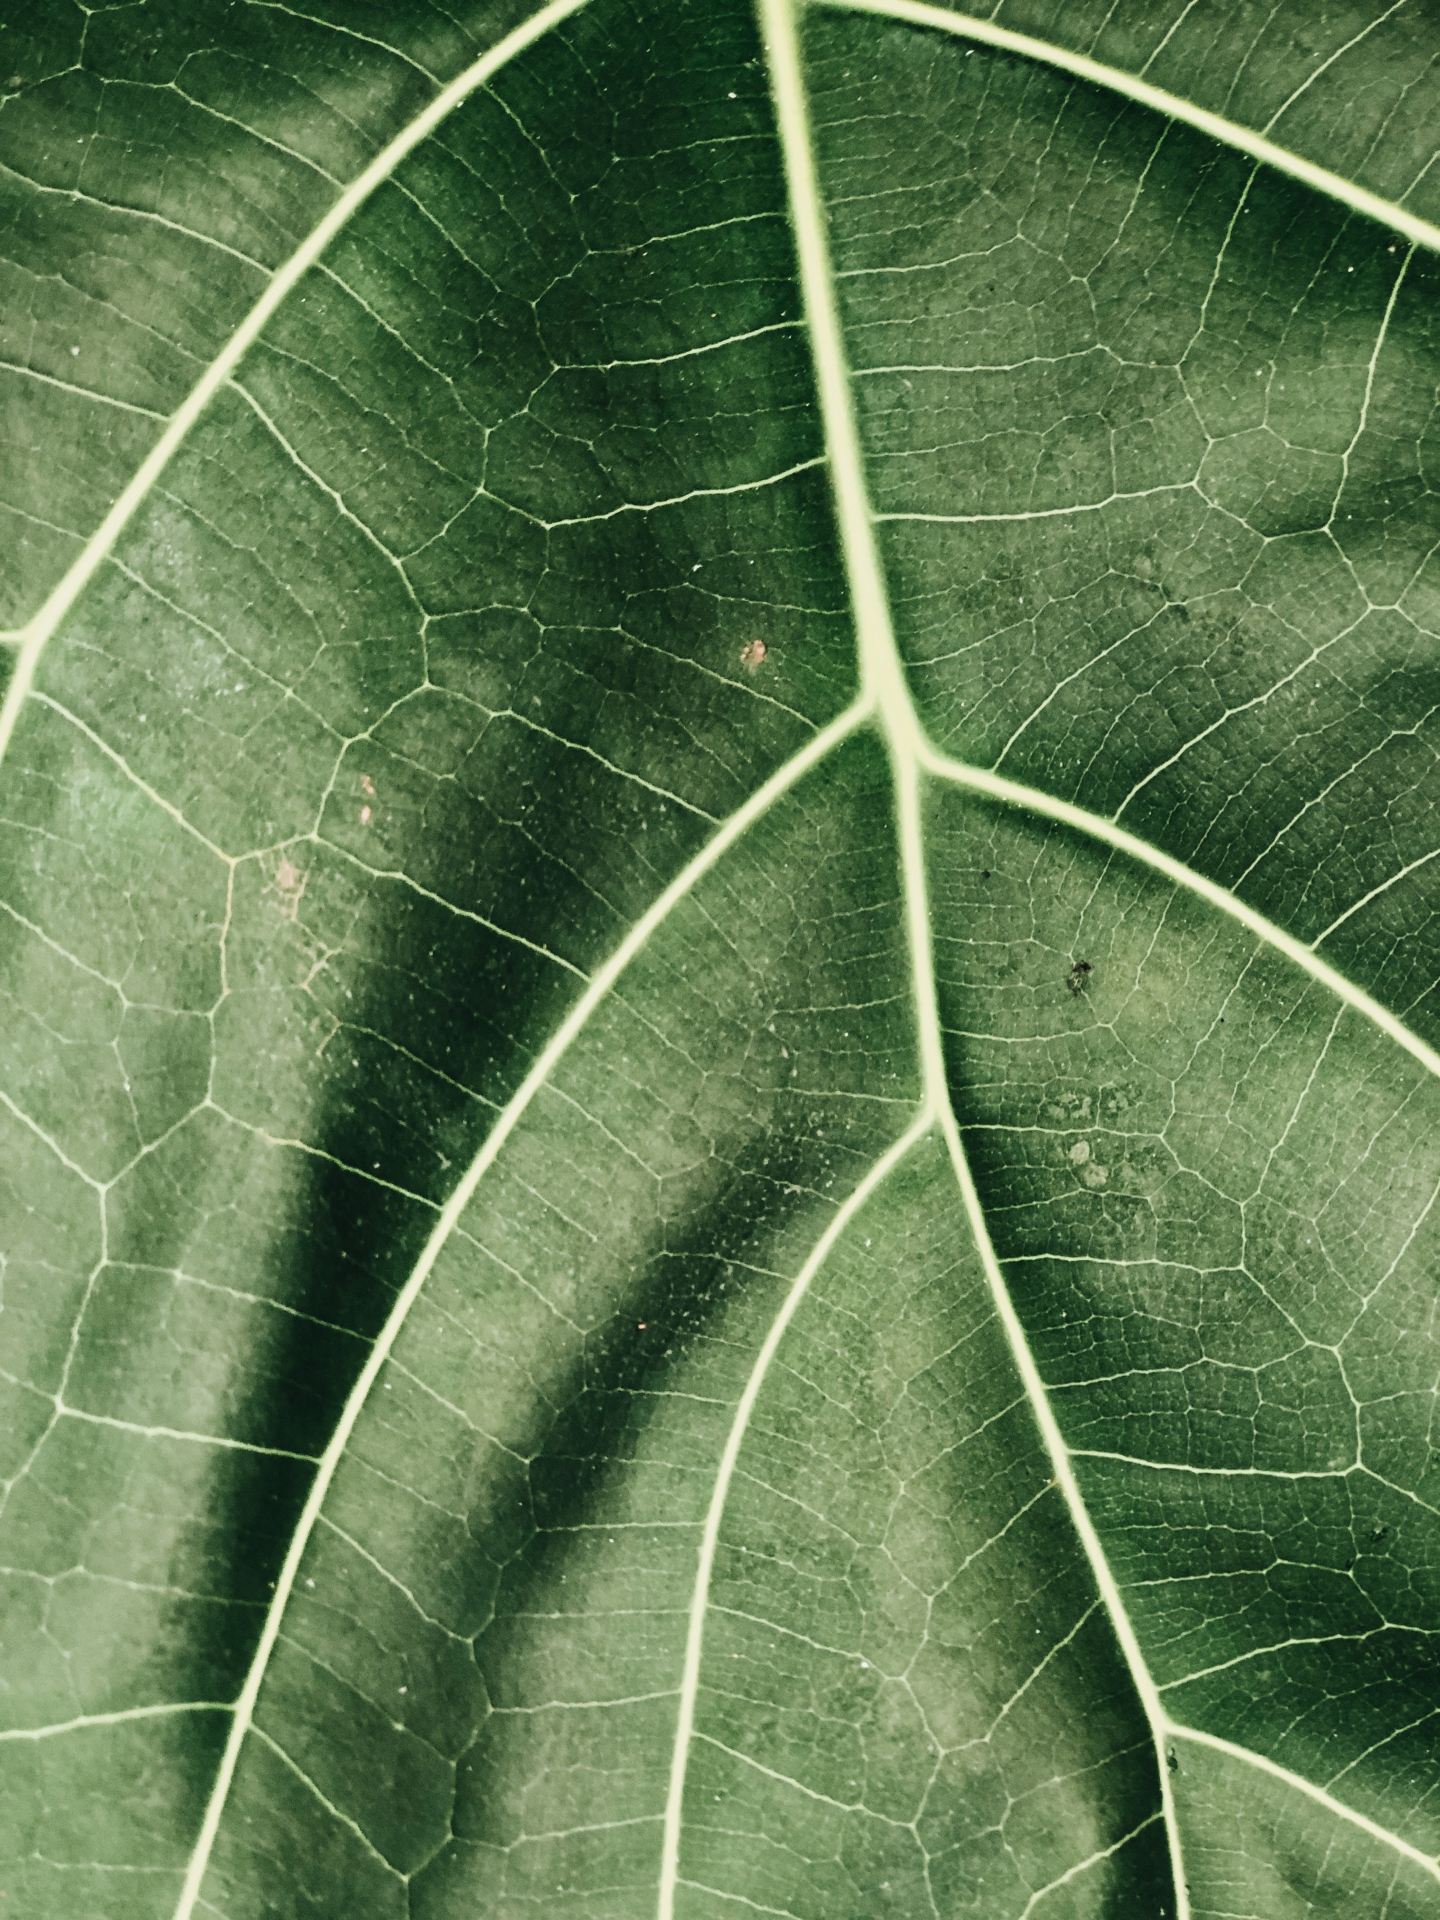 Veins of a leaf up close